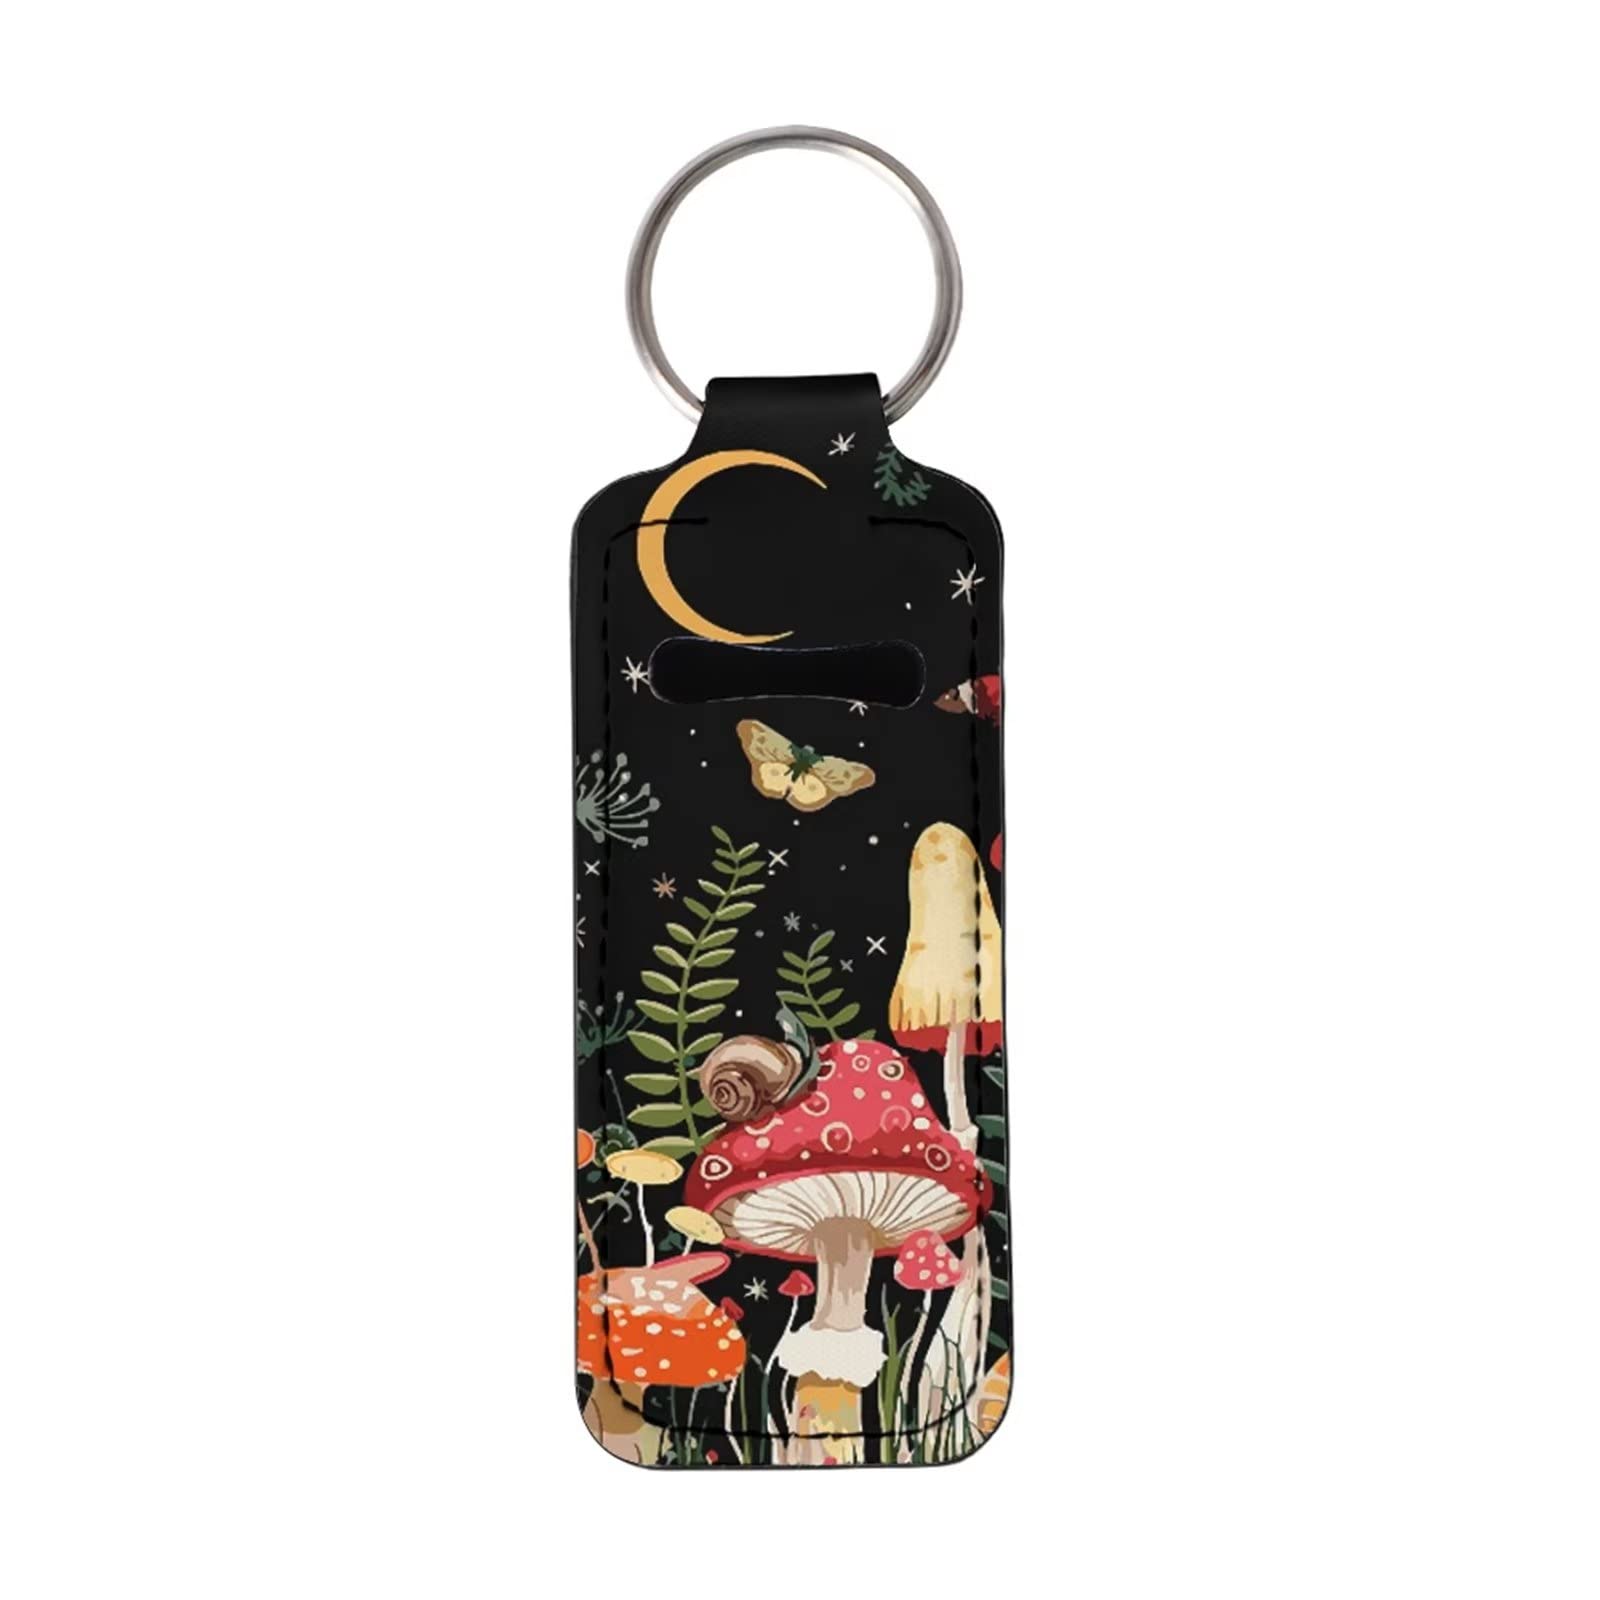 ZPINXIGN Mushroom Keychain Chapstick Holder Lip Gloss Holder Keychain with Clip-on Sleeve Pouch Travel Makeup Accessories